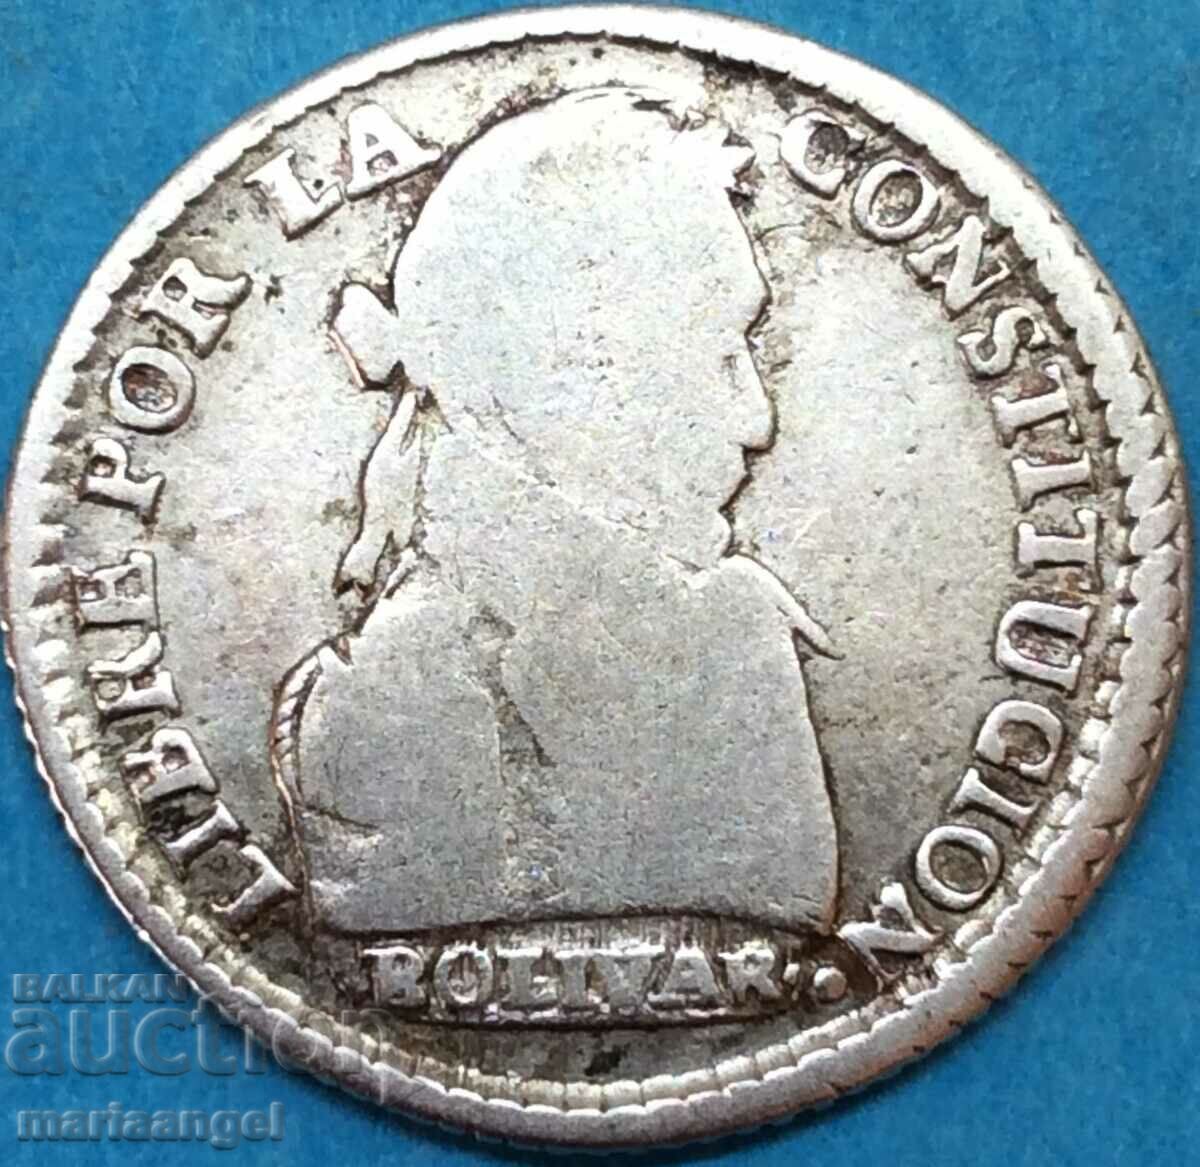 1 Sol Bolivia 1830. bust of Bolivar silver